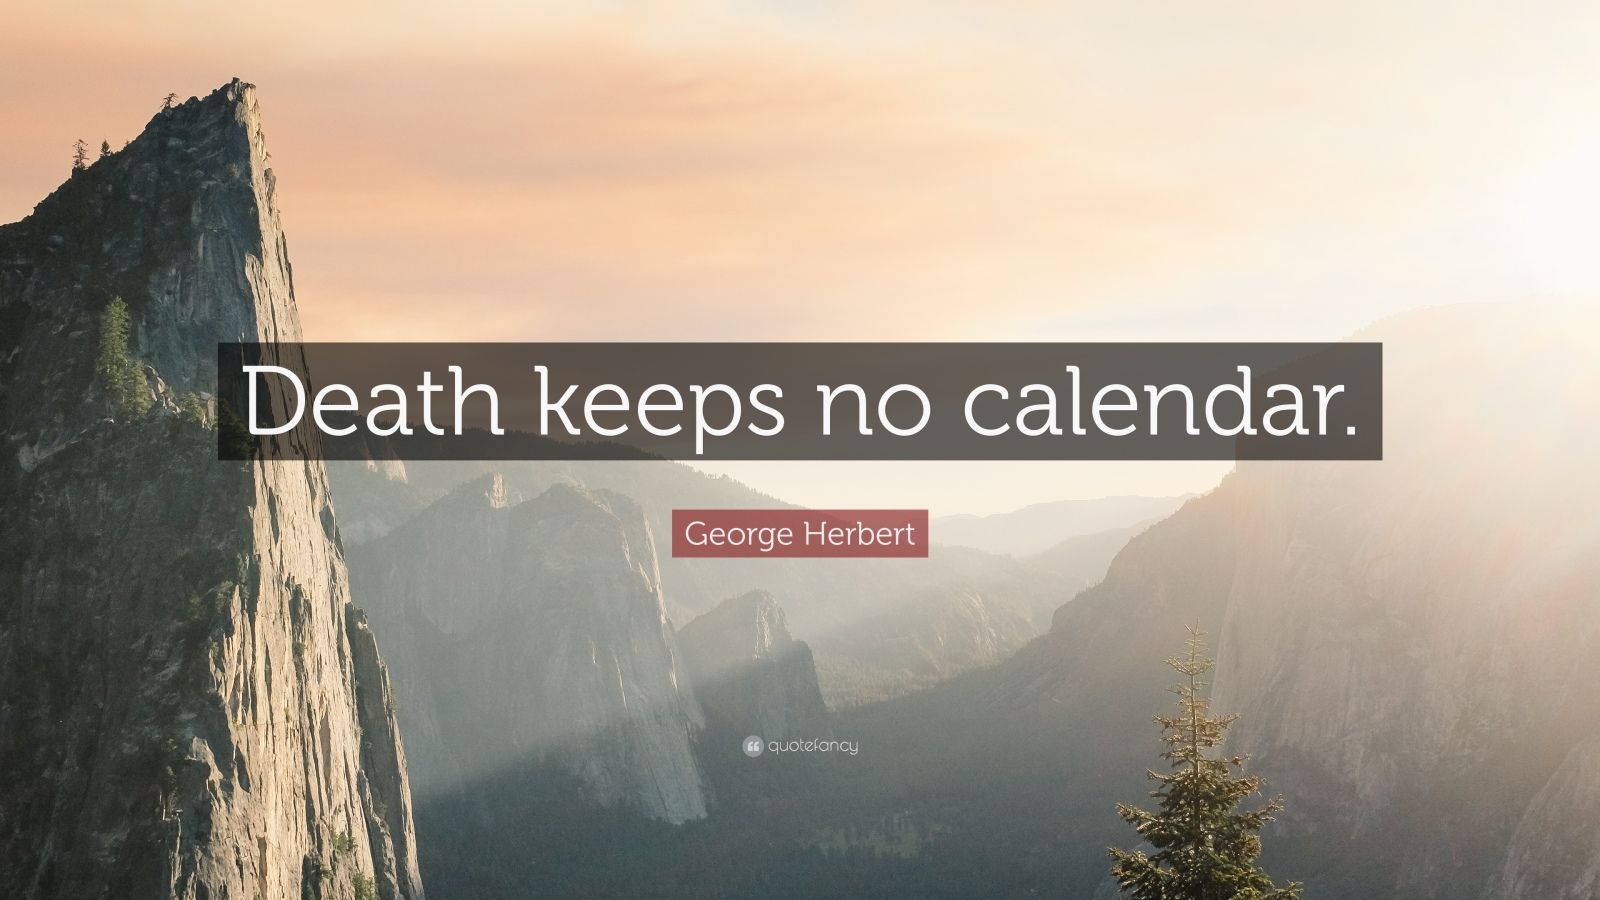 Herbert Quote “Death keeps no calendar.”